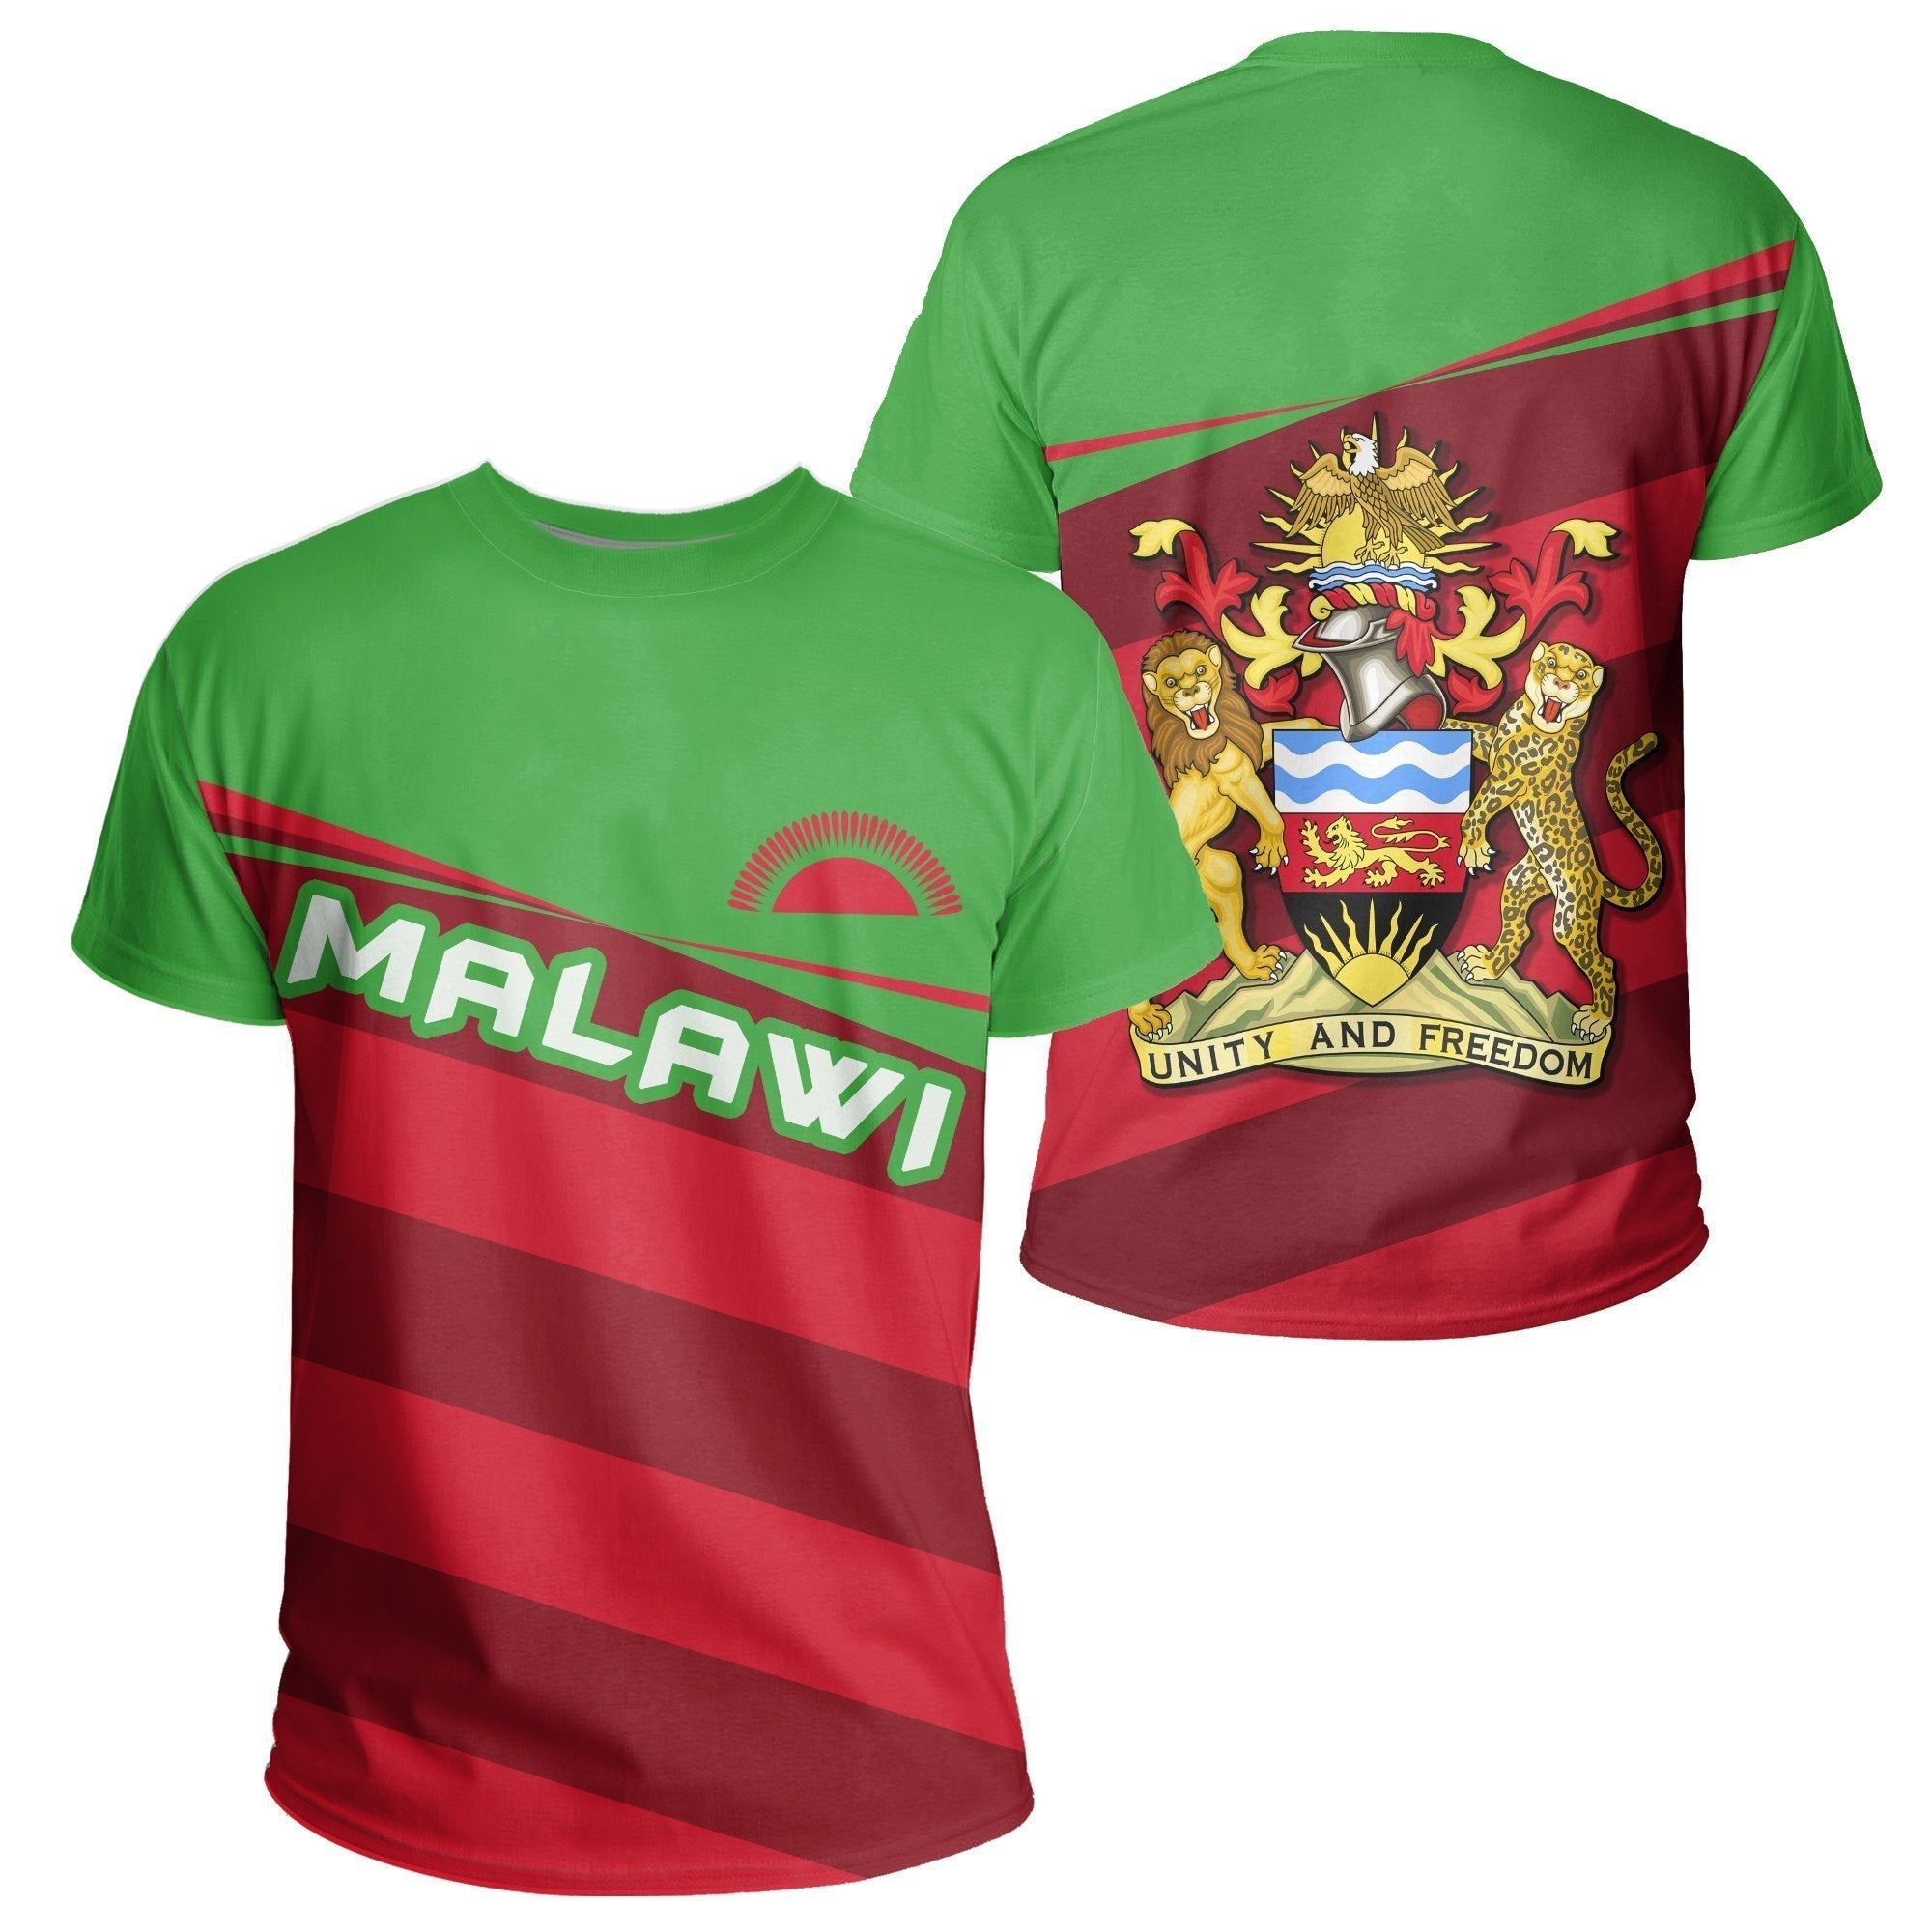 wonder-print-shop-t-shirt-malawi-vivian-style-tee